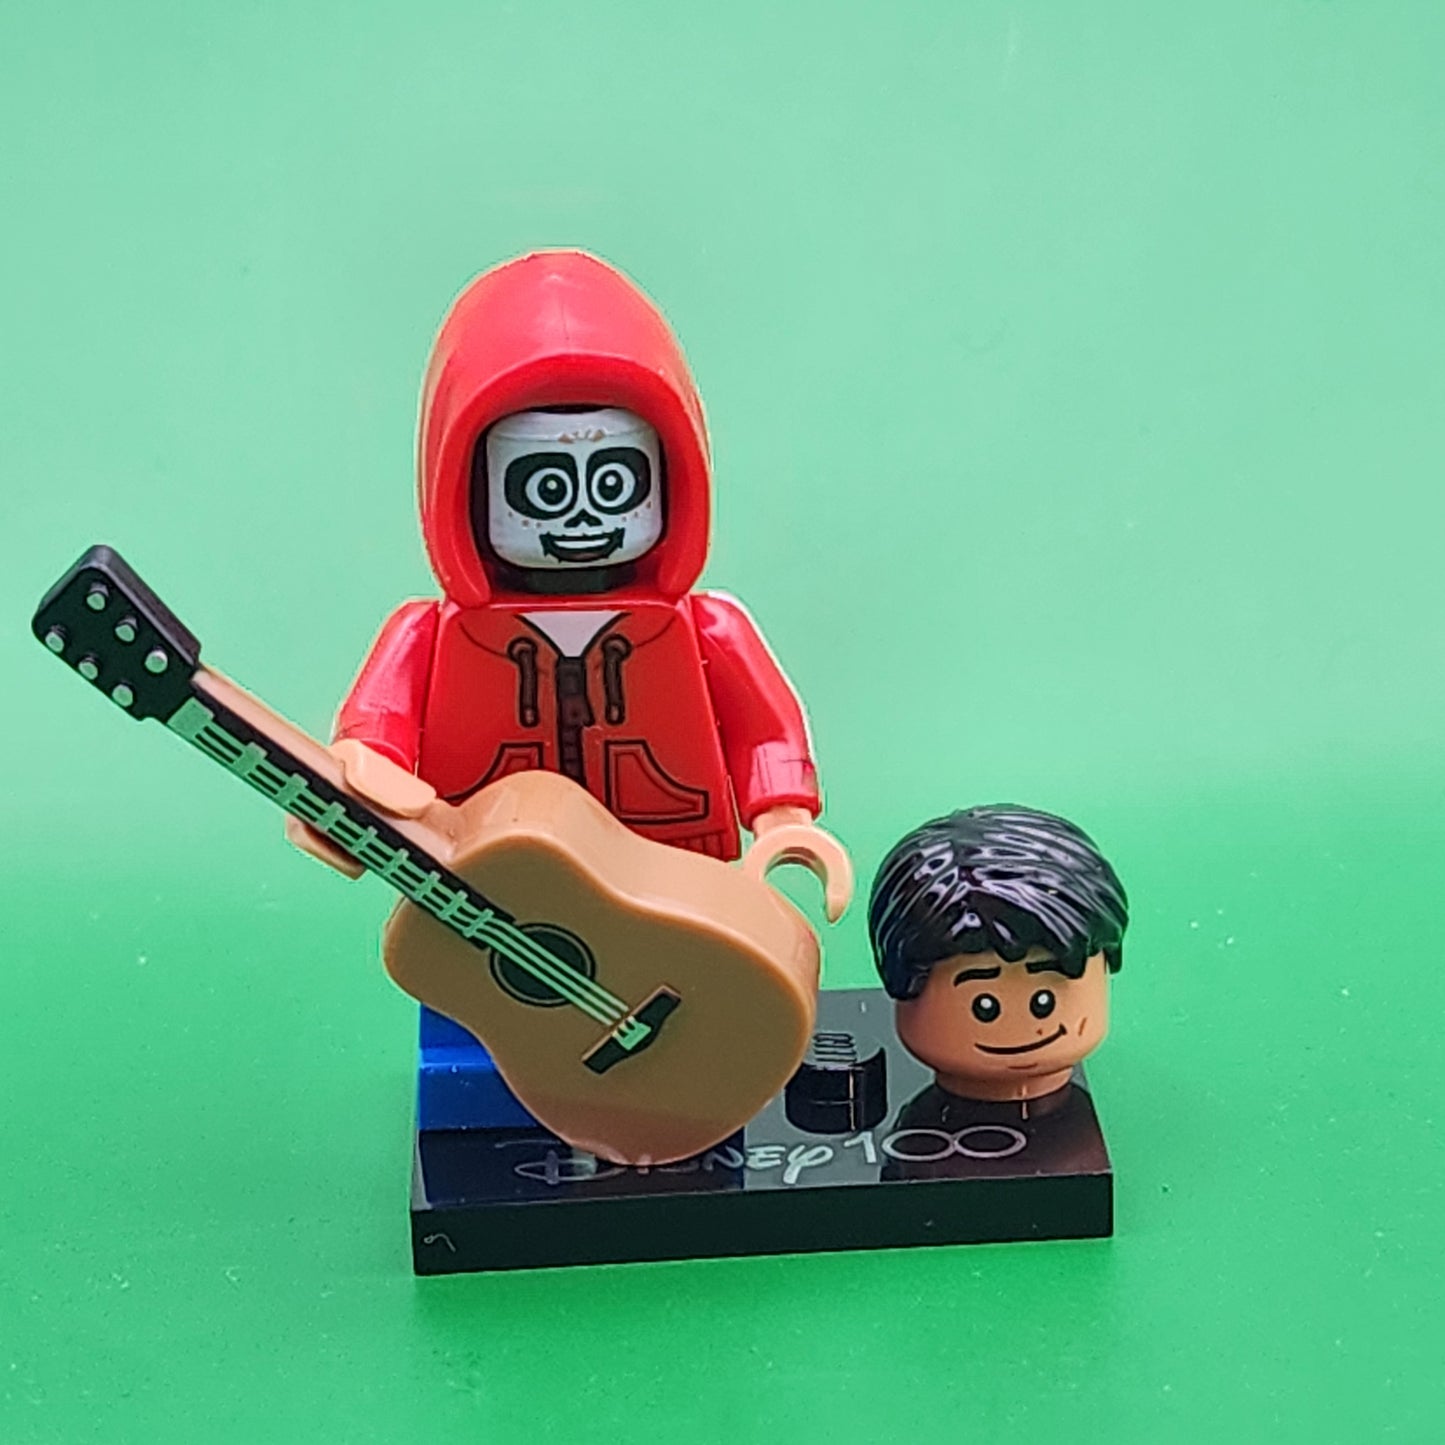 Lego Miguel Disney 100 Minifigure Guitar and extra Head